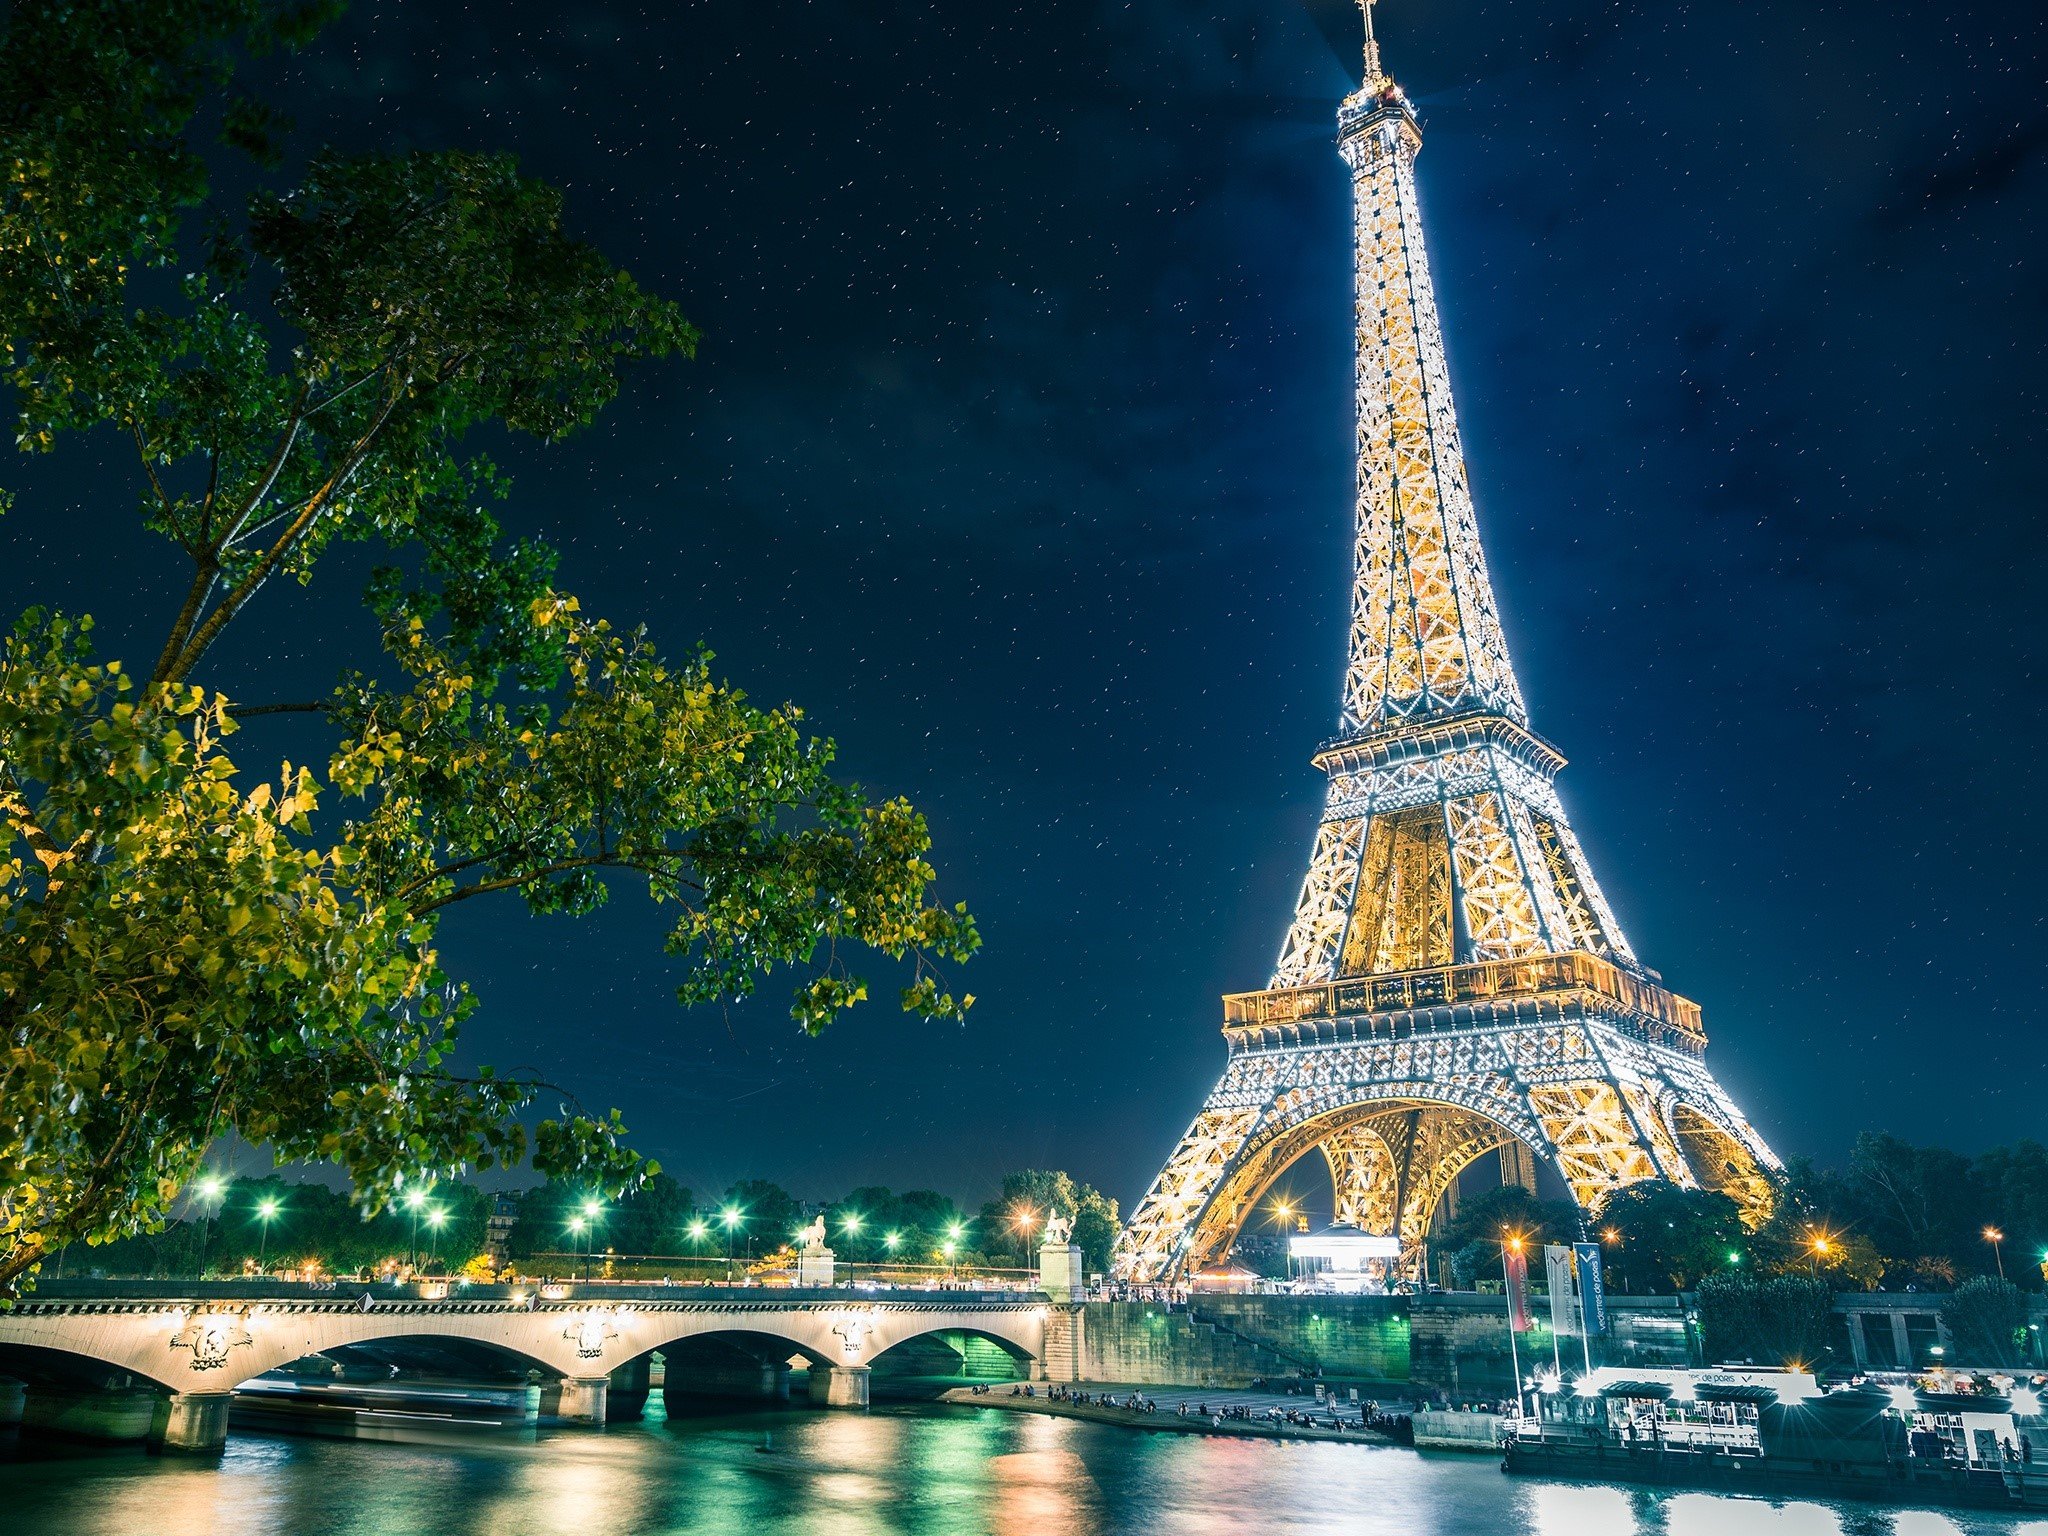 Eiffel Tower Paris Wallpaper